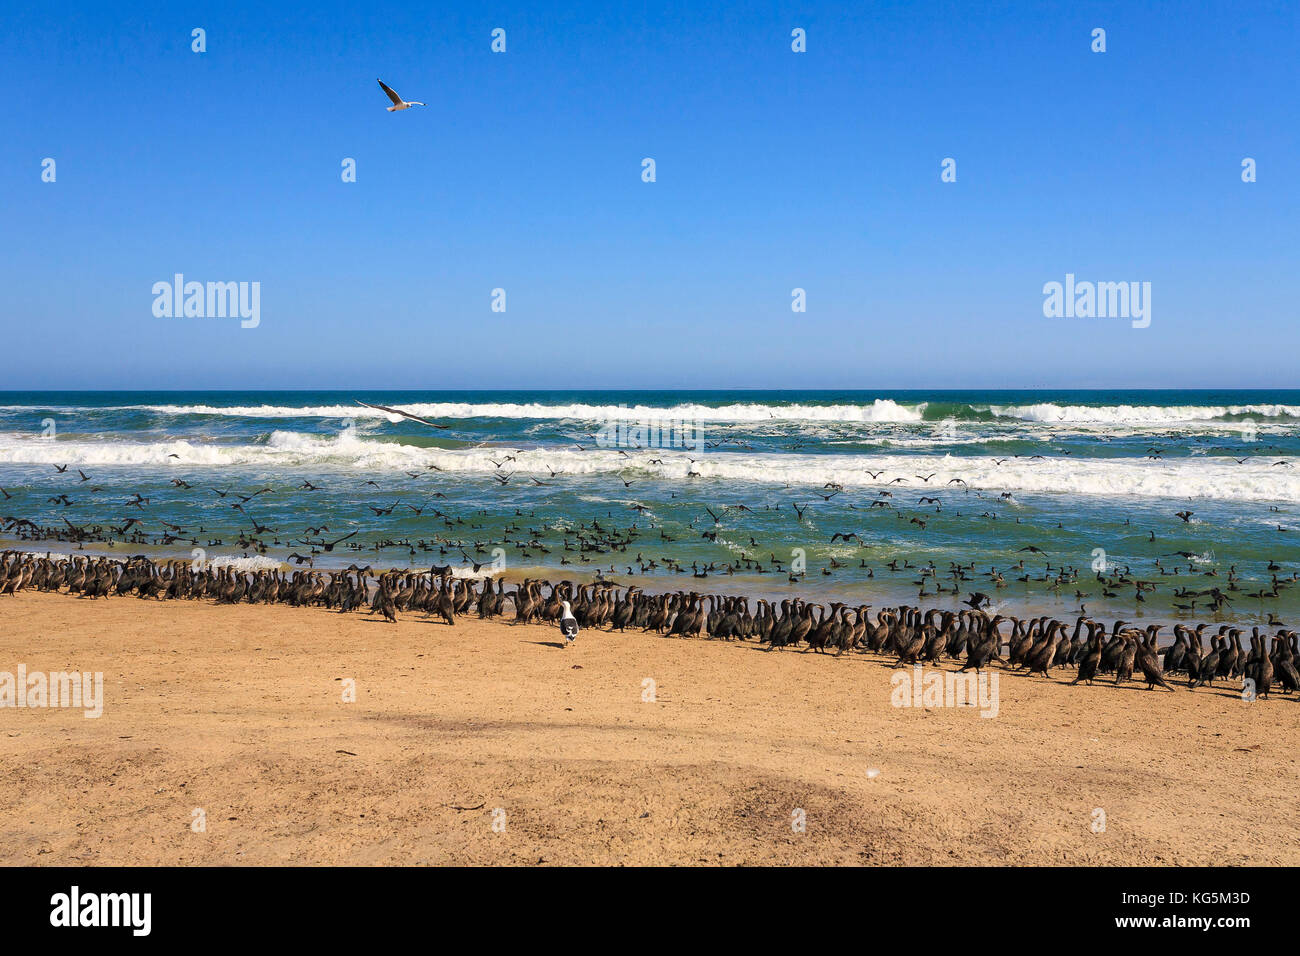 Multitude of seabirds on sand shore framed by waves of the ocean Walvis Bay Namib Desert Erongo Region Namibia Southern Africa Stock Photo